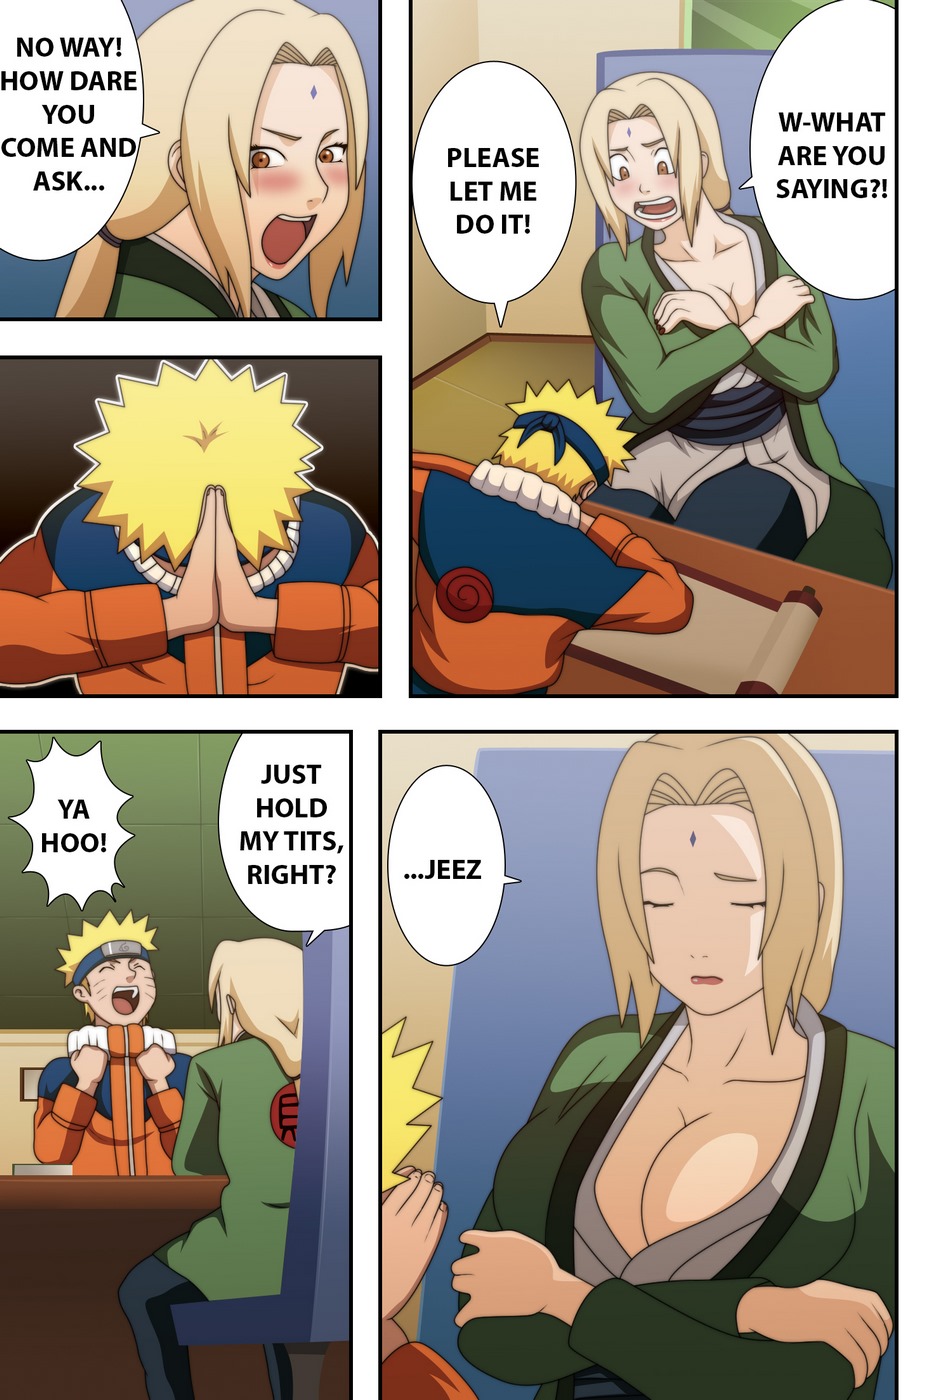 Naruto (naruho) chichikage Big Brust Ninja